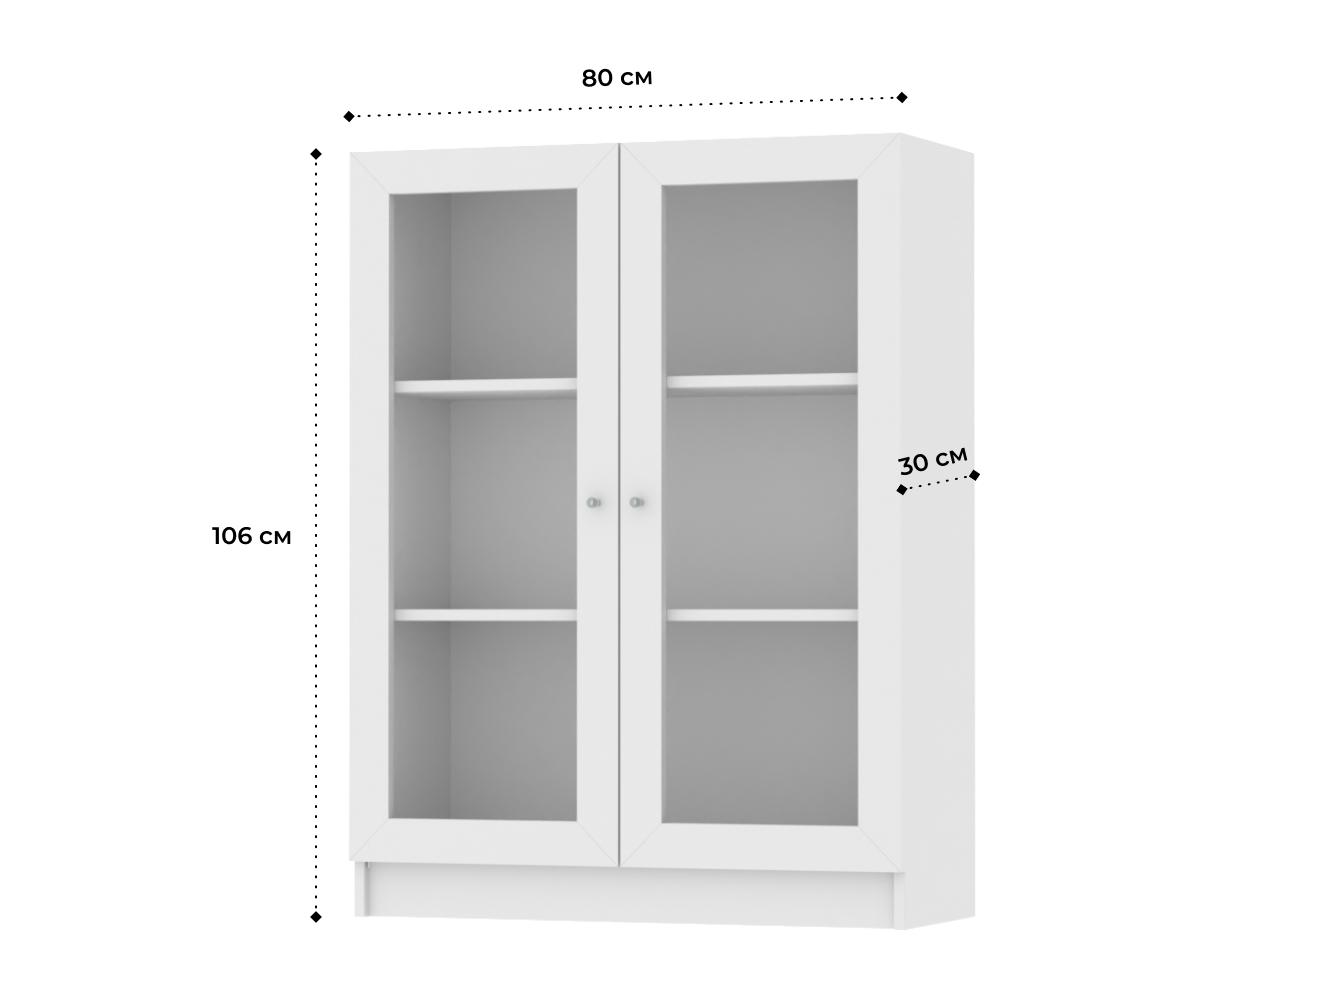  Книжный шкаф Билли 419 white ИКЕА (IKEA) изображение товара